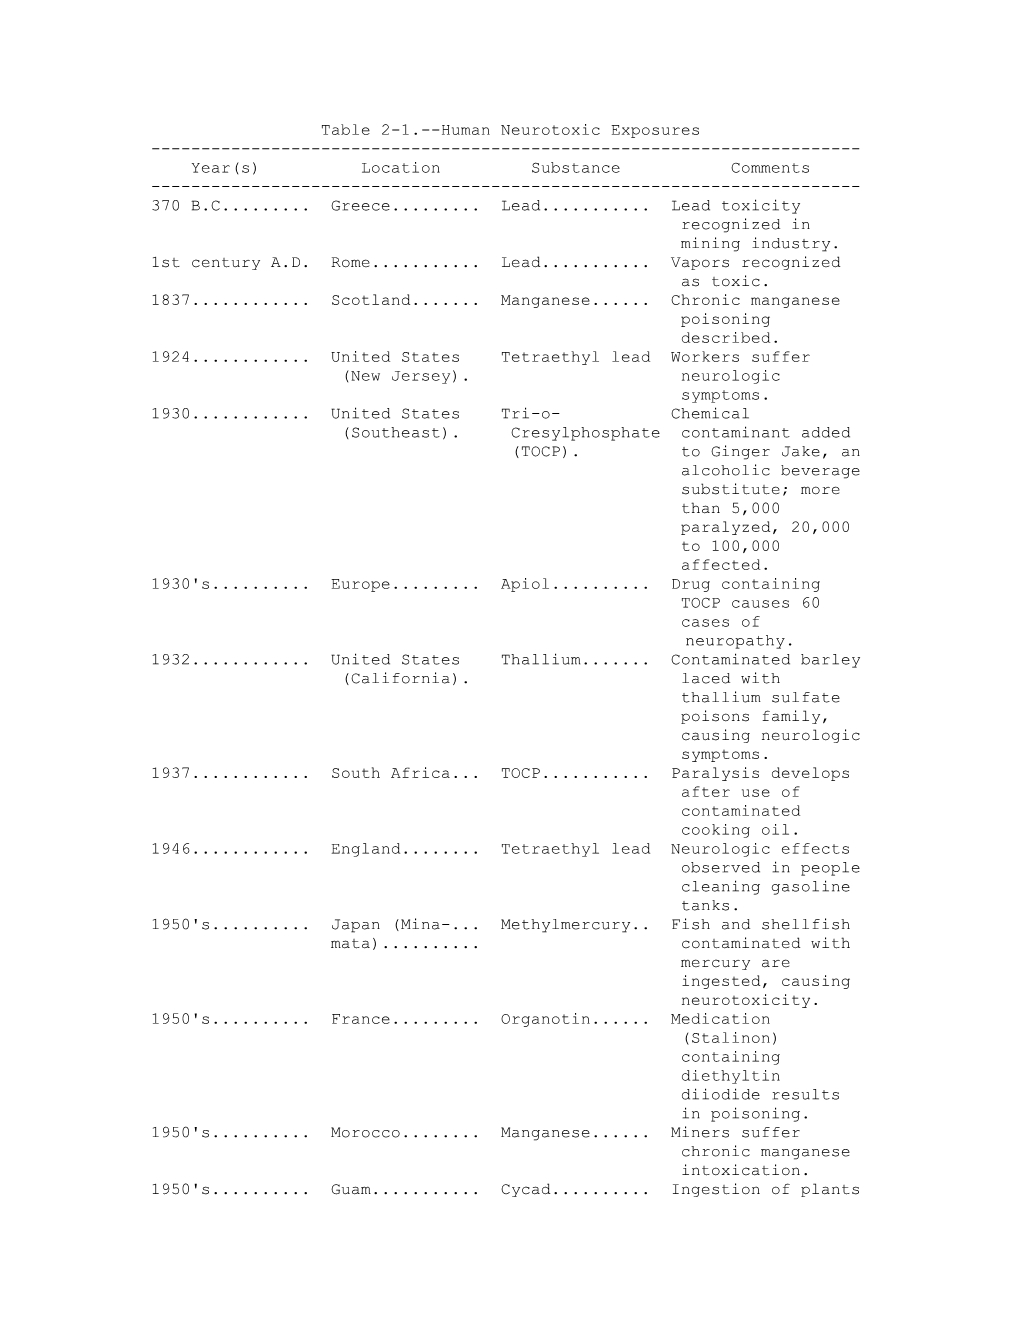 Table 2-1. Human Neurotoxic Exposures